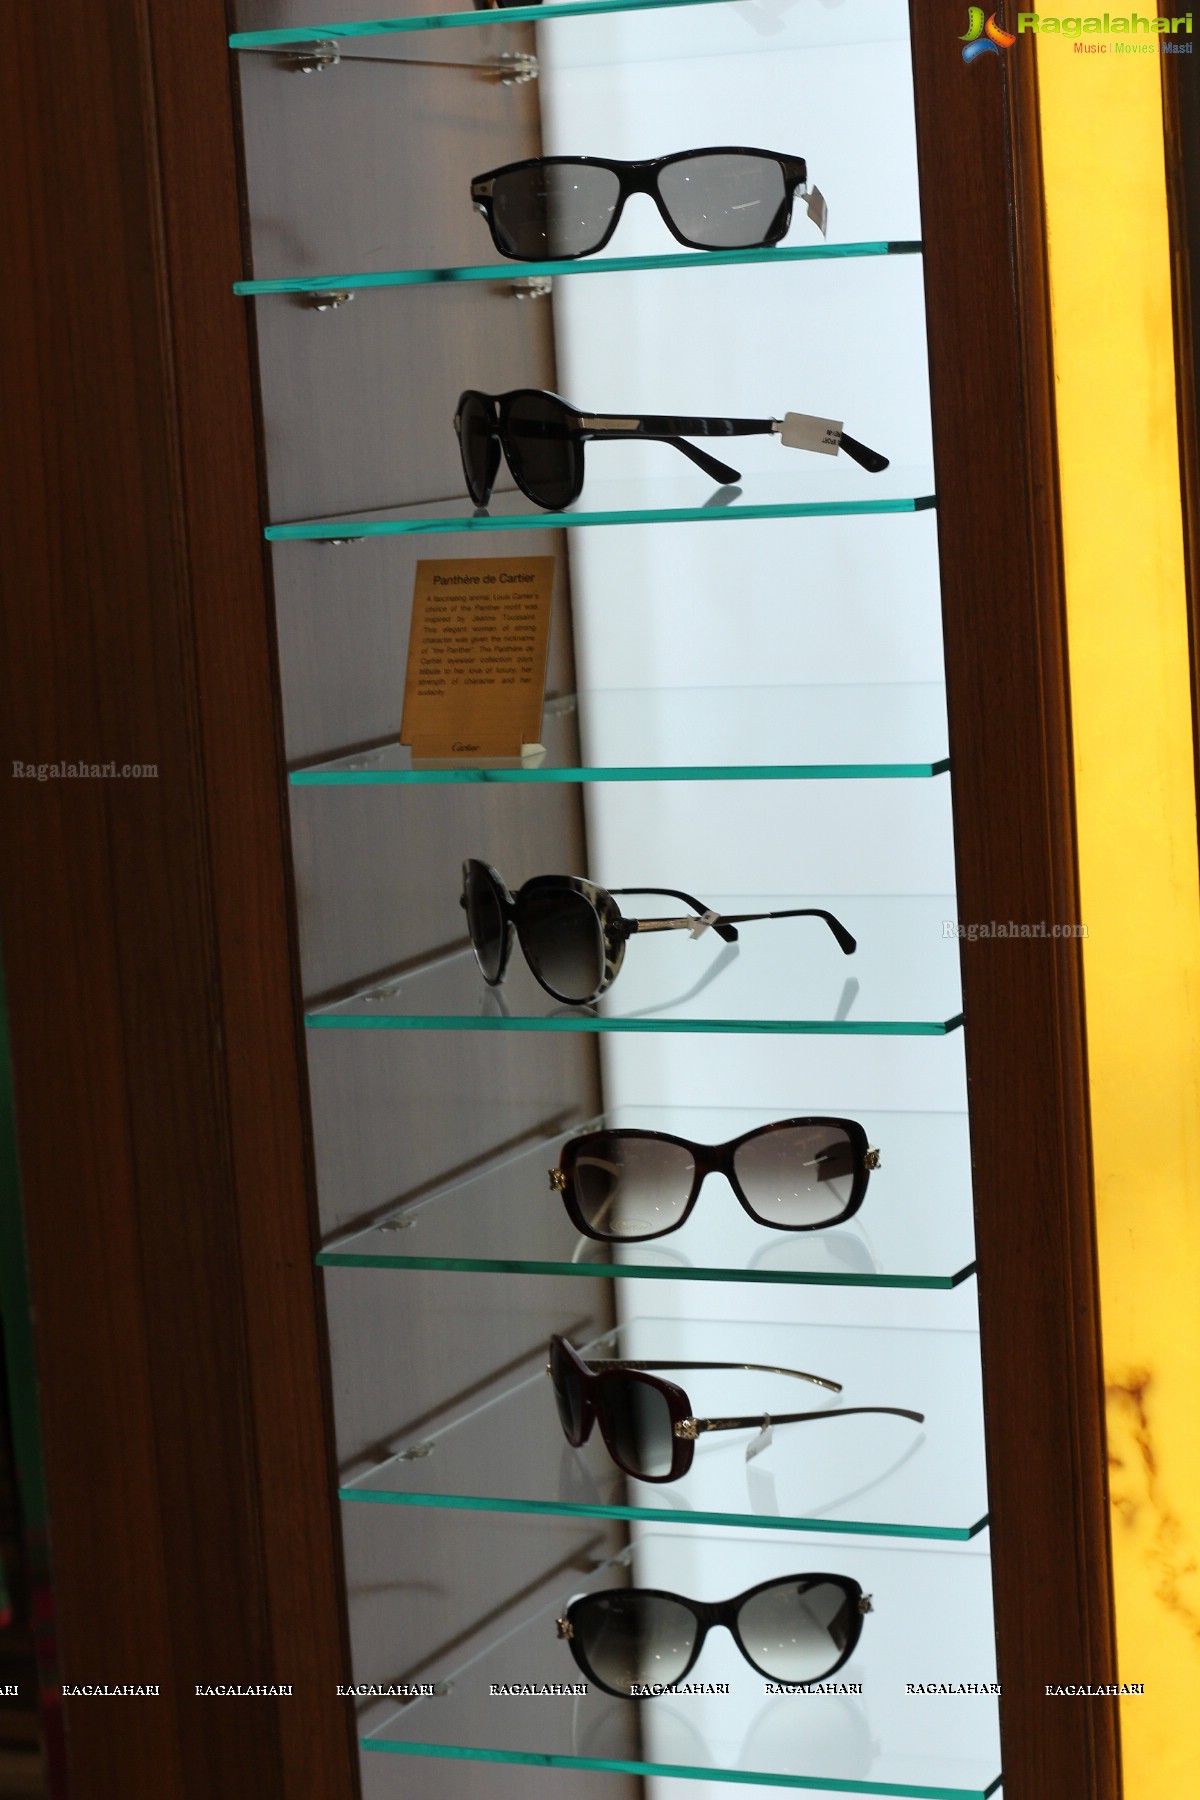 Lawrence and Mayo Luxury Eyewear Collection at Lawrence & Mayo Boutique, Road No. 12, Banjara Hills, Hyderabad